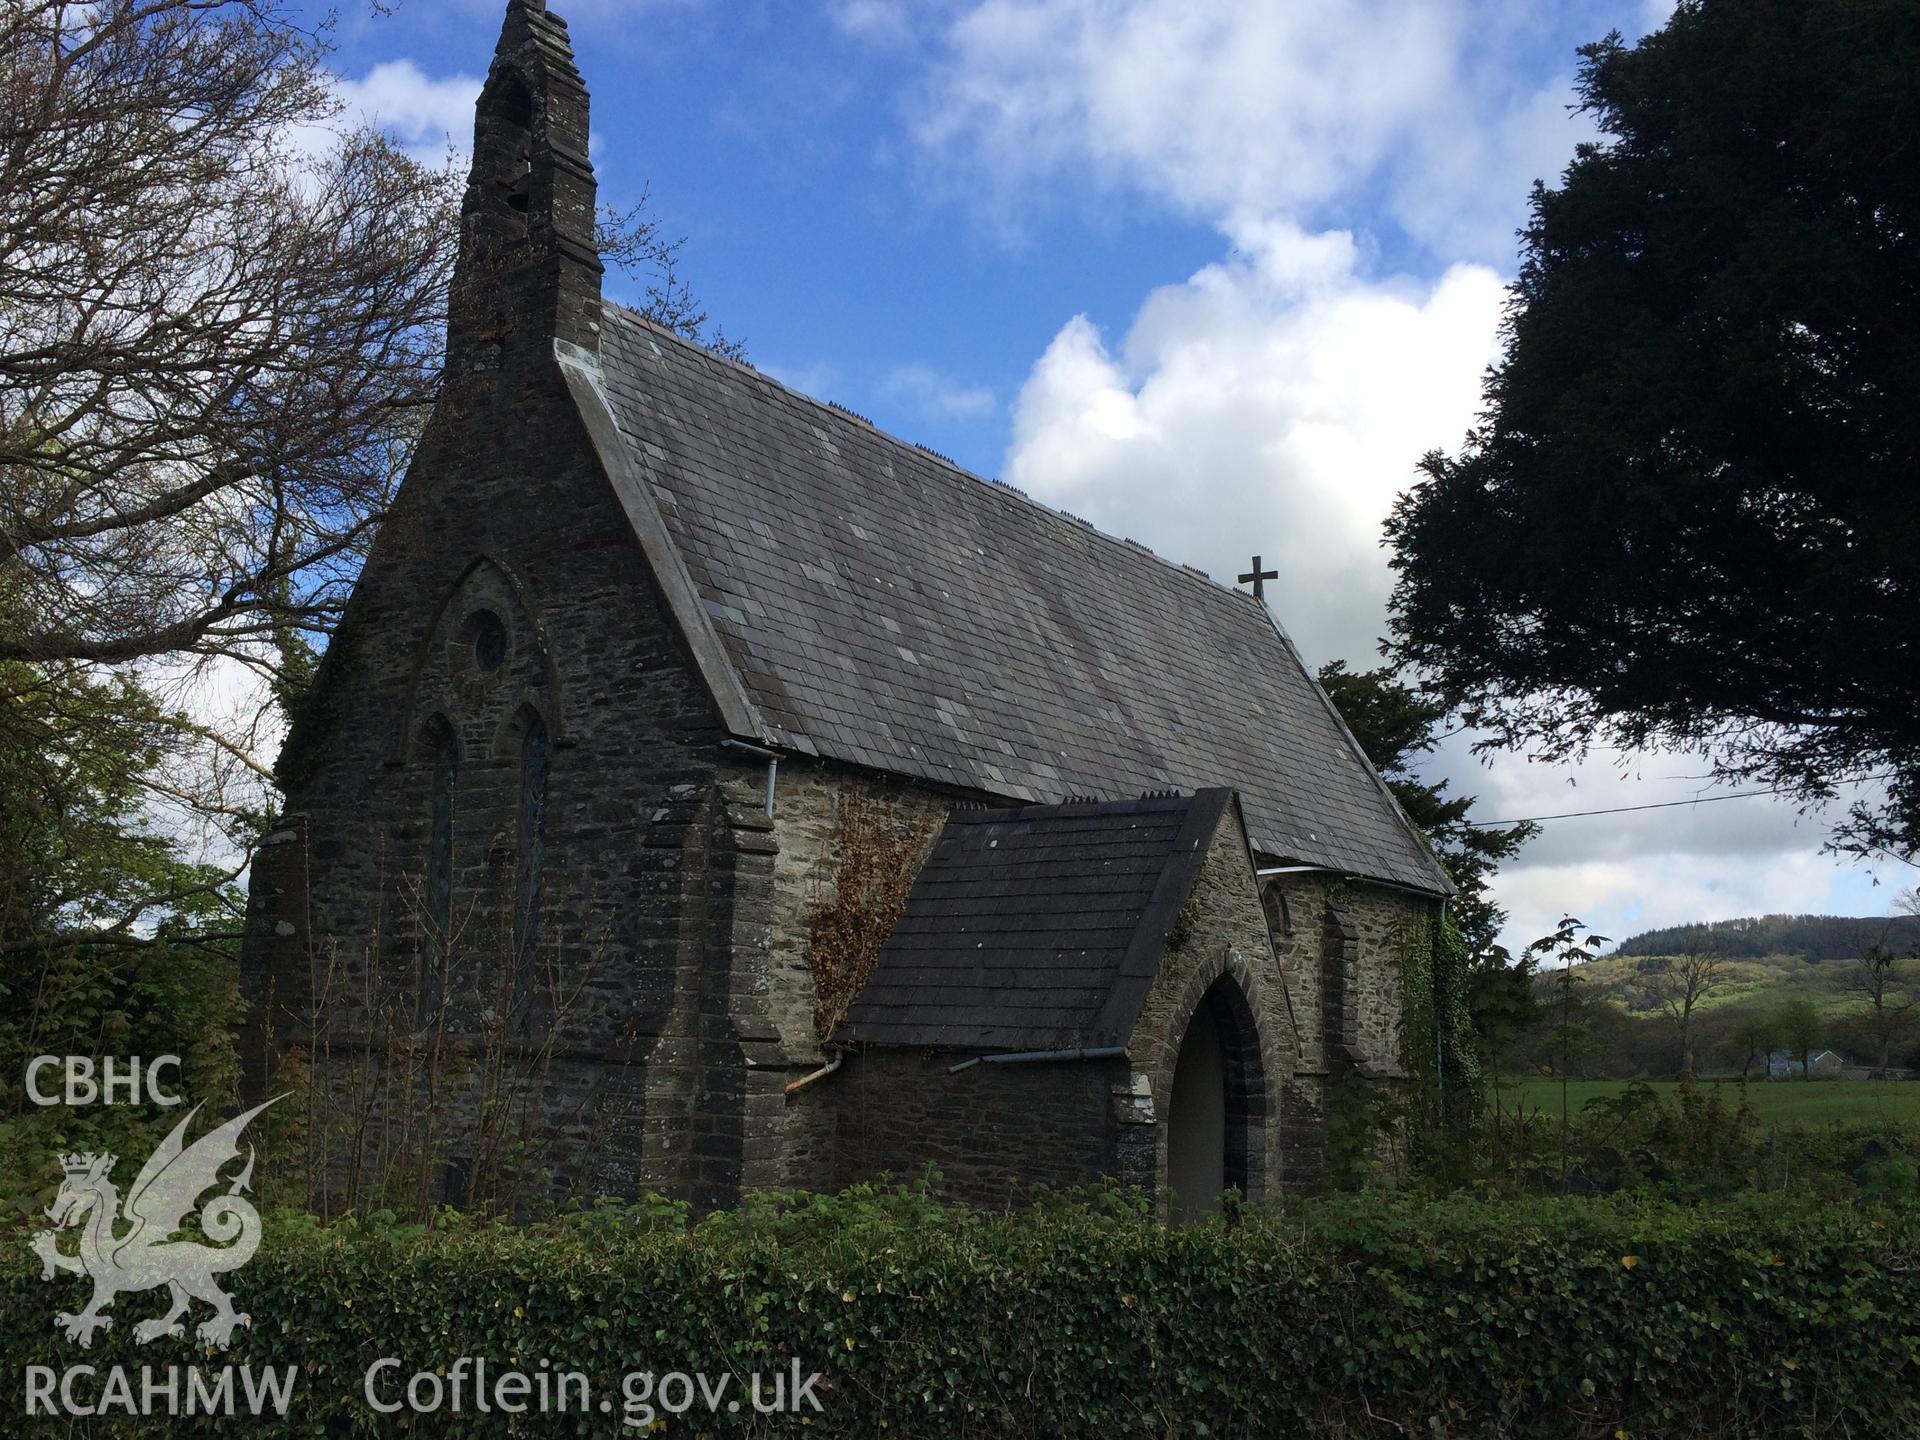 Colour photo showing Llancynfelyn Church,  produced by Paul R. Davis, 23rd April 2017.